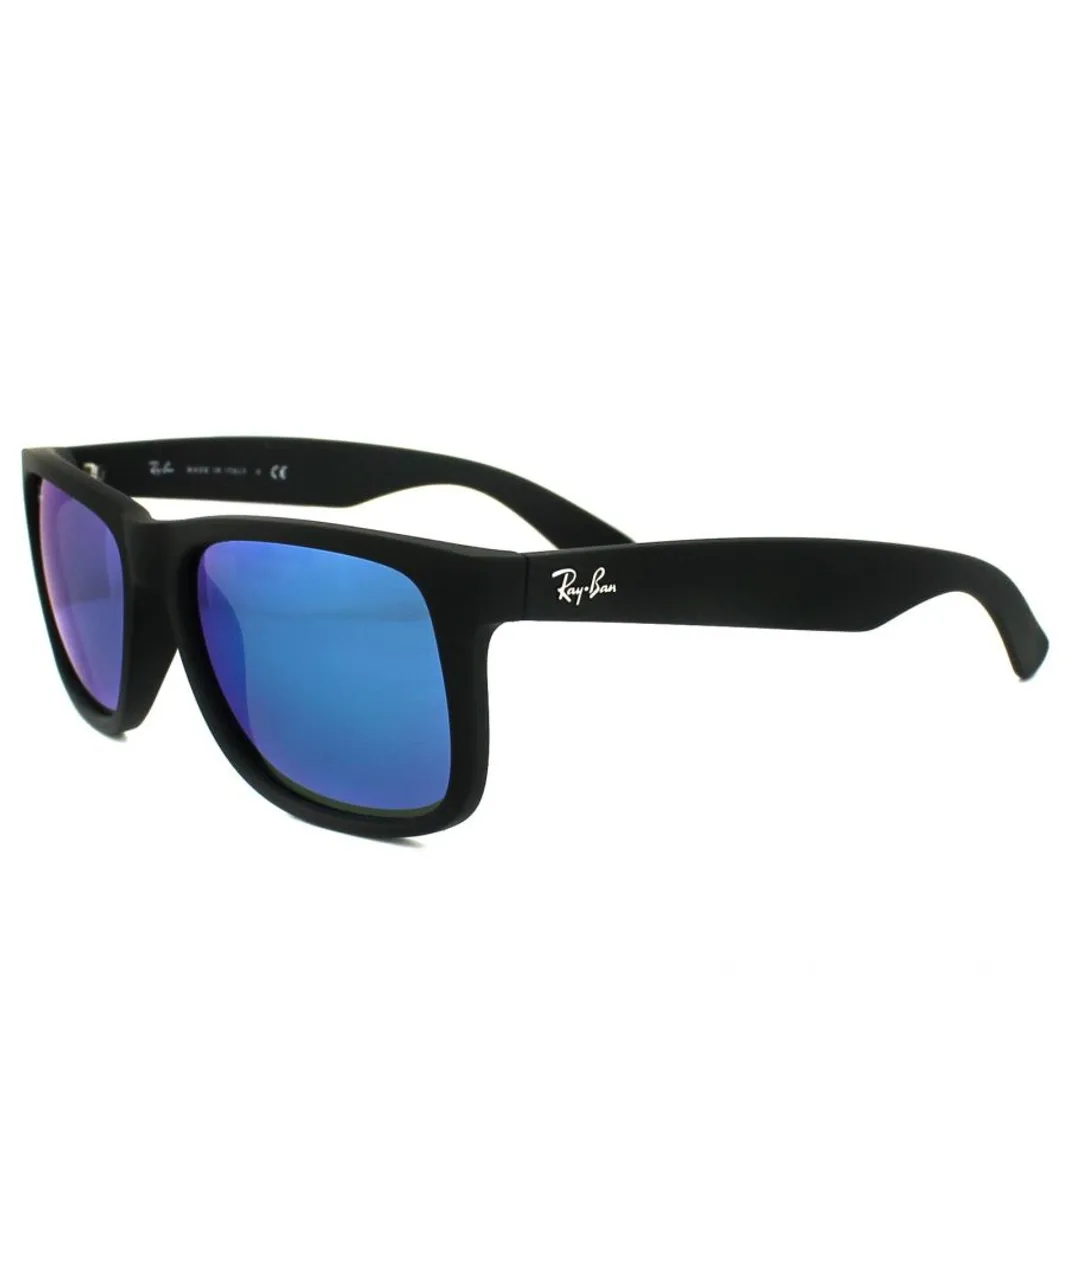 Ray-Ban Mens Sunglasses Justin 4165 622/55 Rubber Black Blue Mirror - One